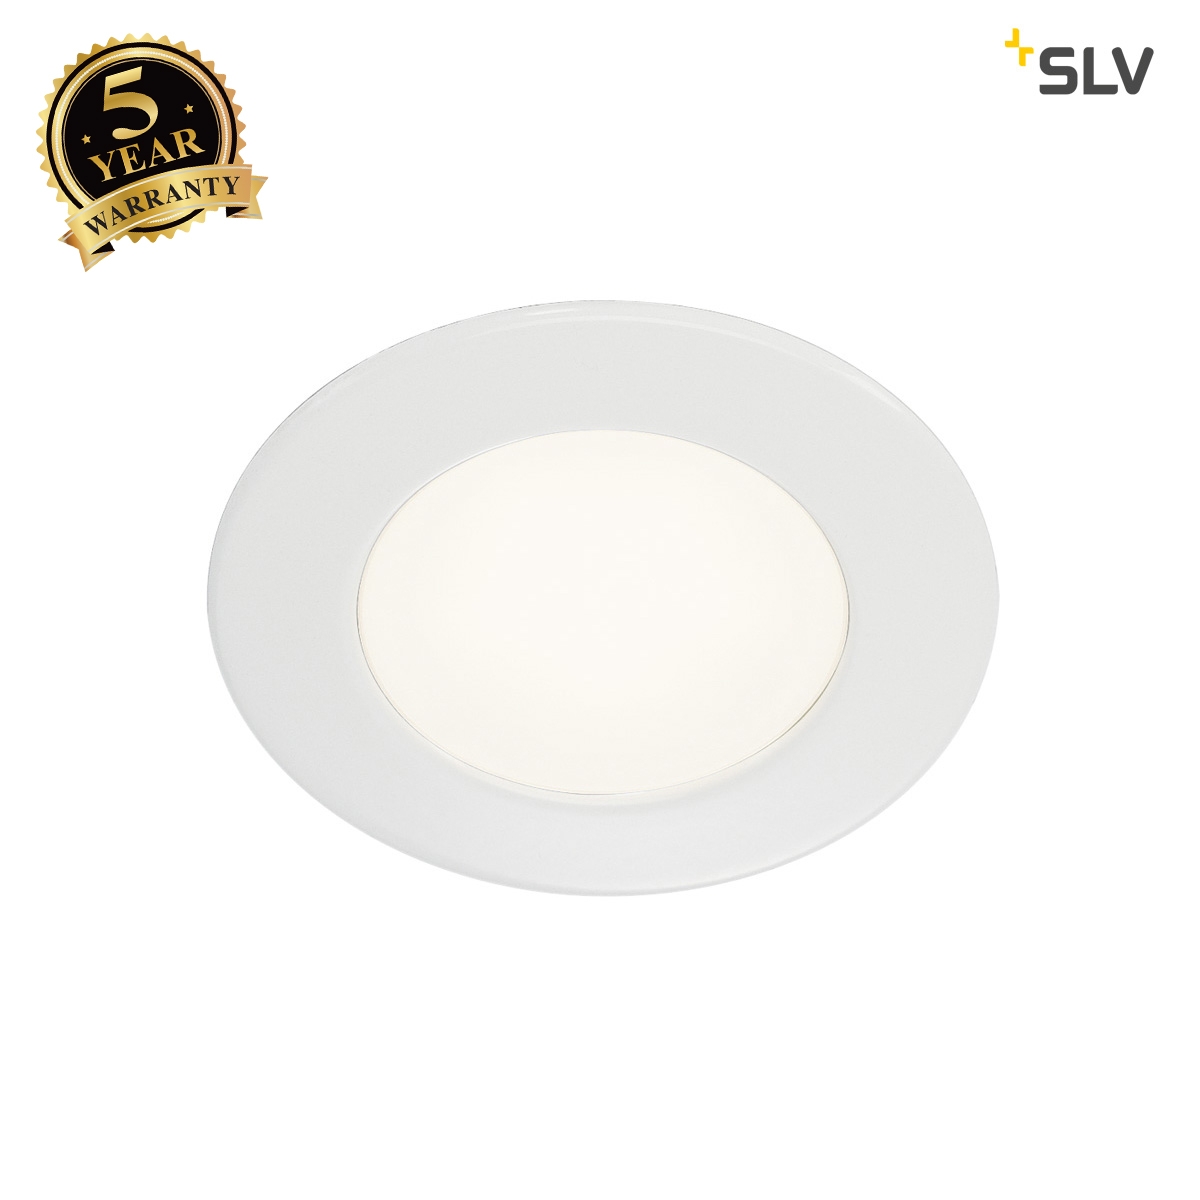 SLV DL 126 LED downlight, round, white, 3W LED, warm white, 12V 112221